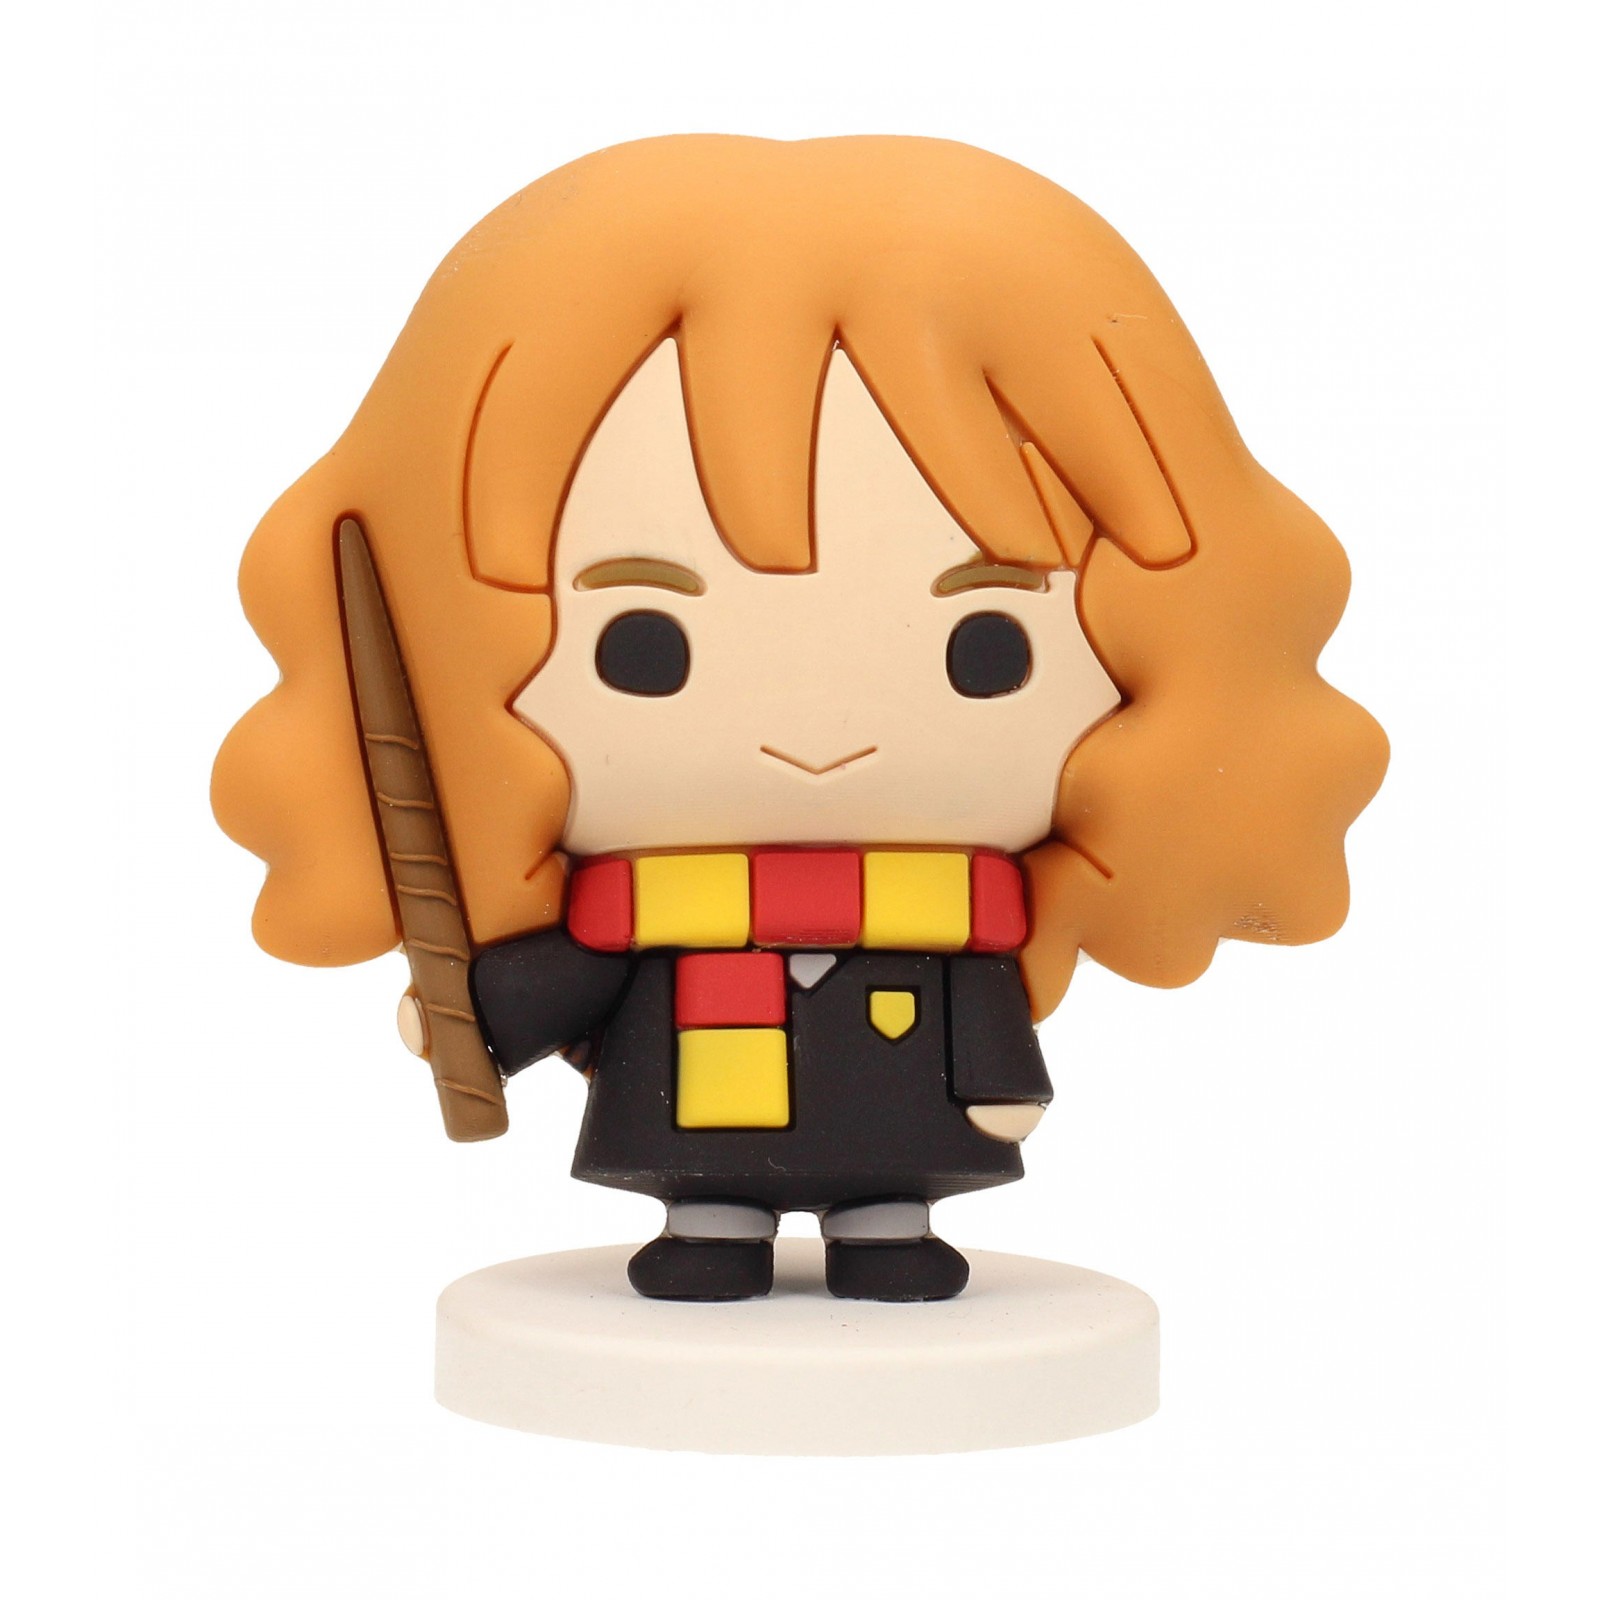 Figura Mini Hermione Harry Potter